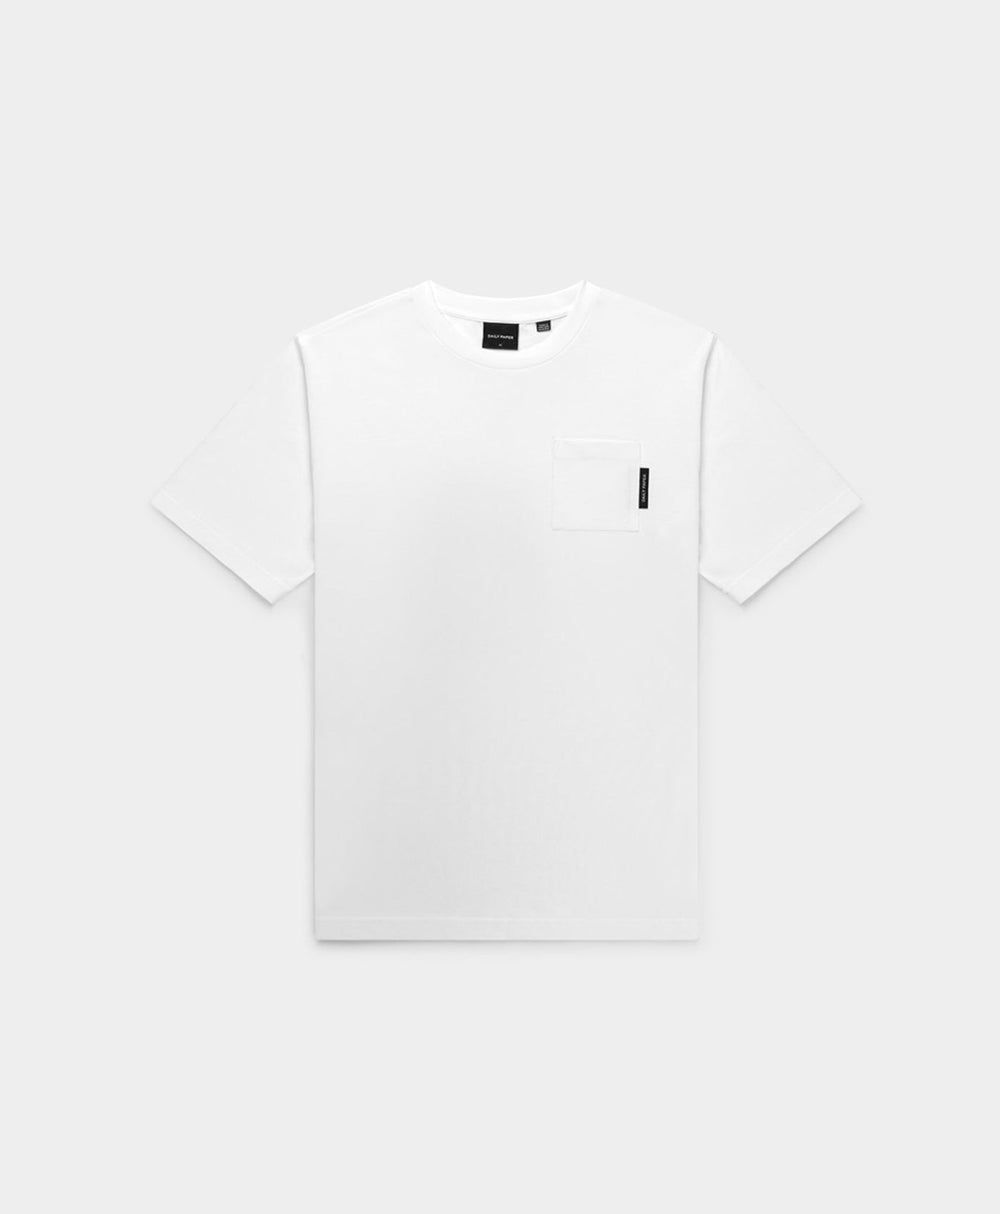 DP - White Njata T-Shirt - Packshot - Front